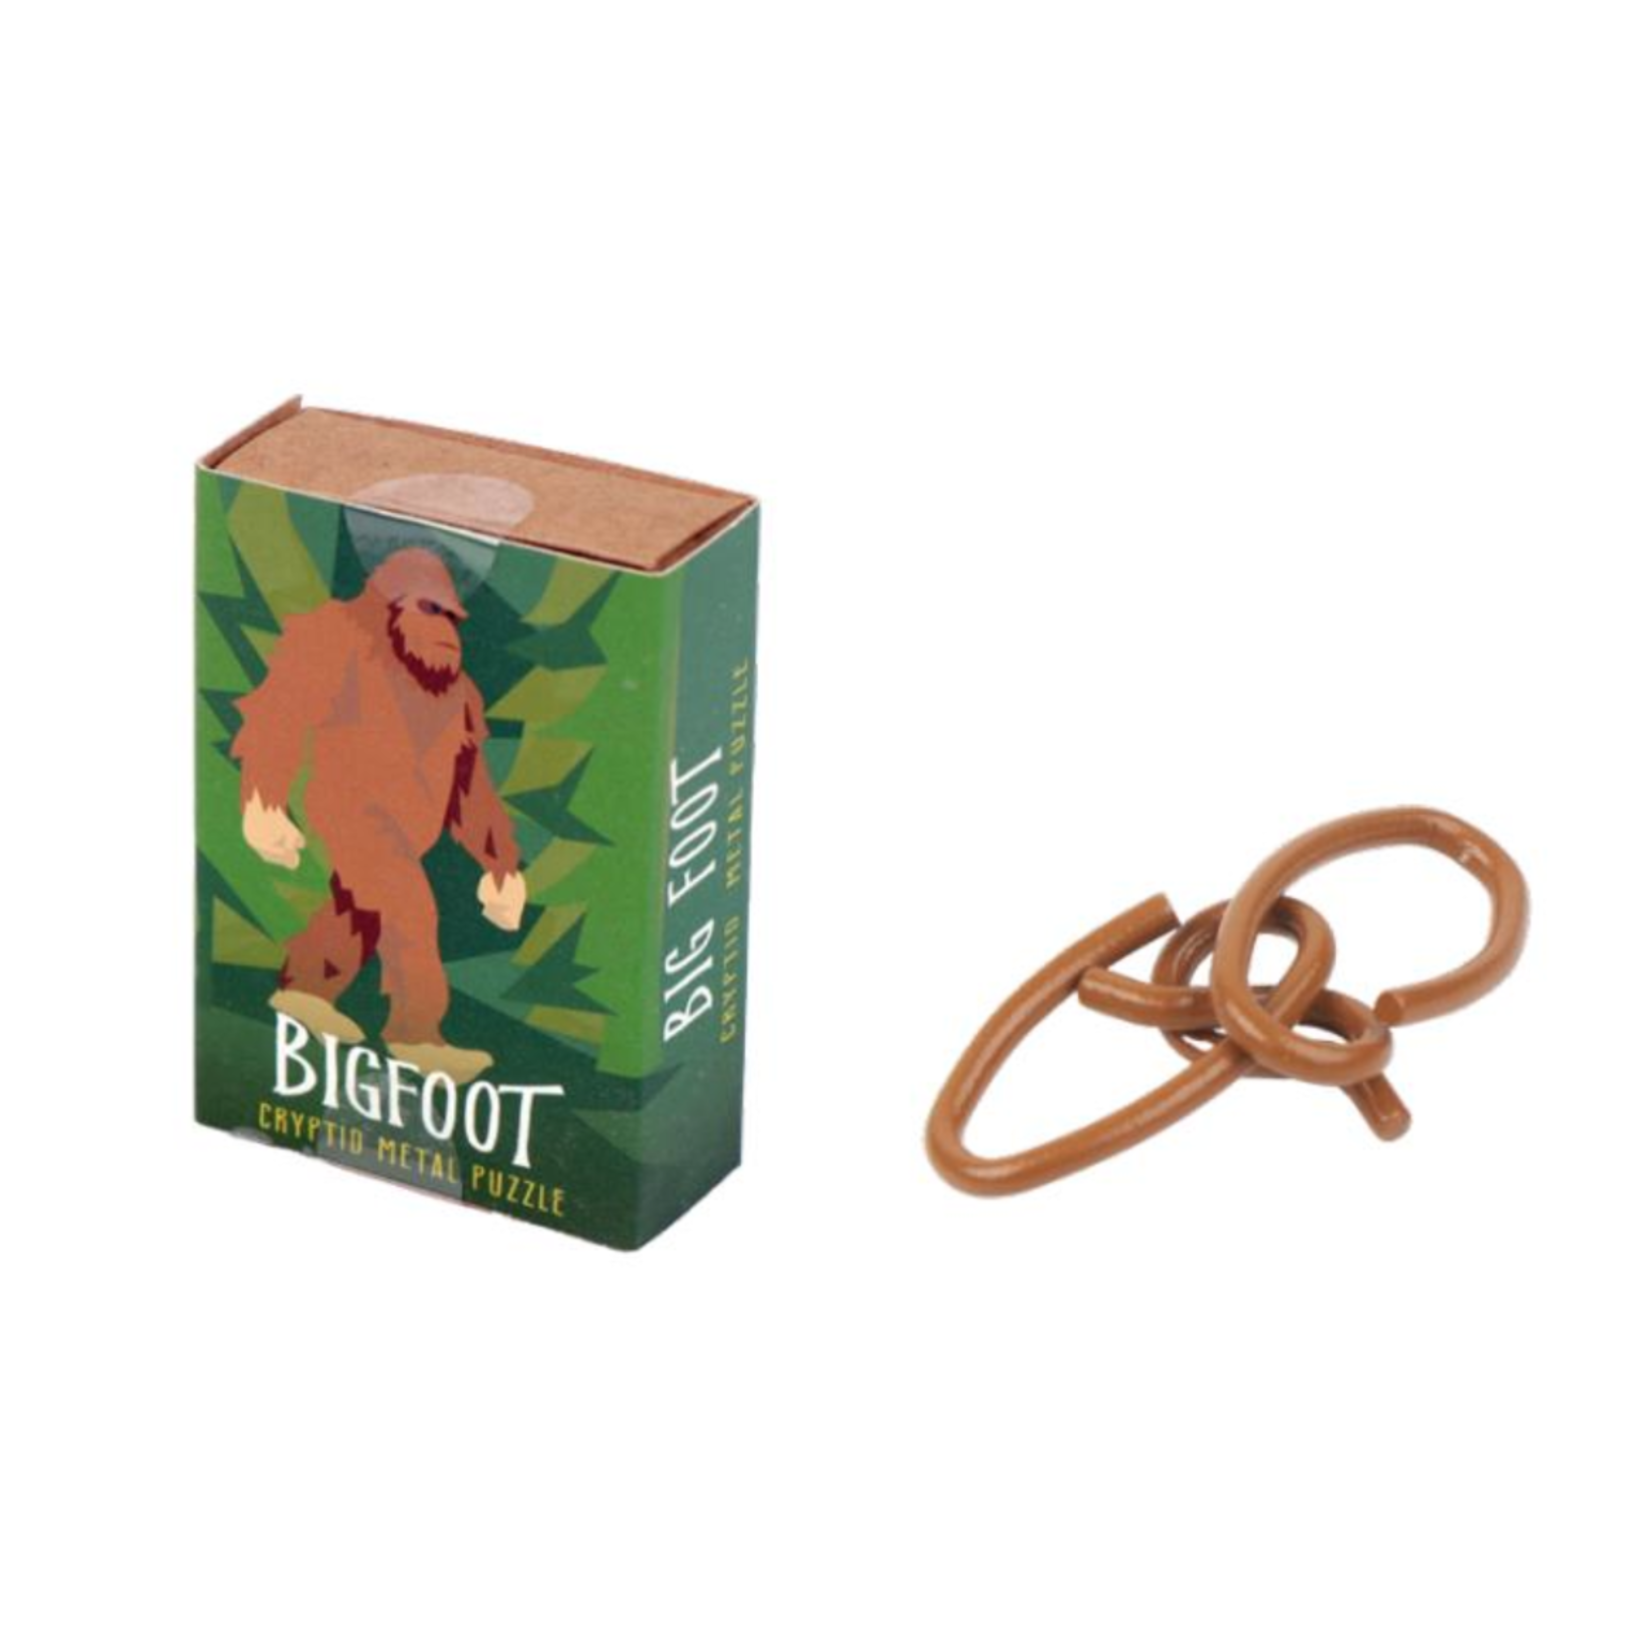 Project Genius Bigfoot Puzzle Box